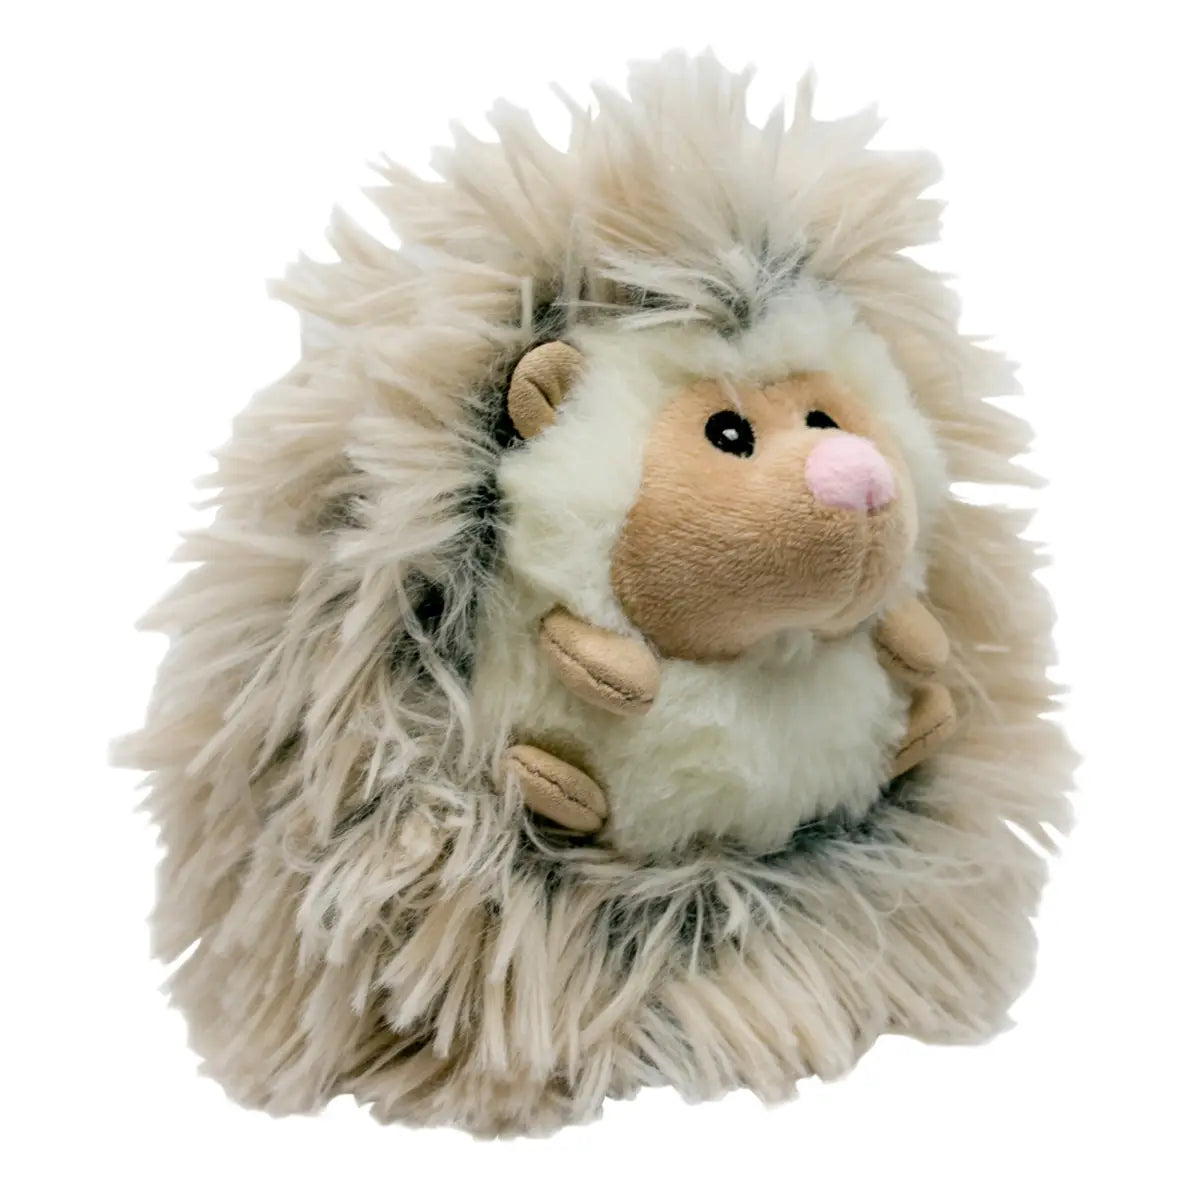 Tall Tails - Fluffy Hedgehog 8"